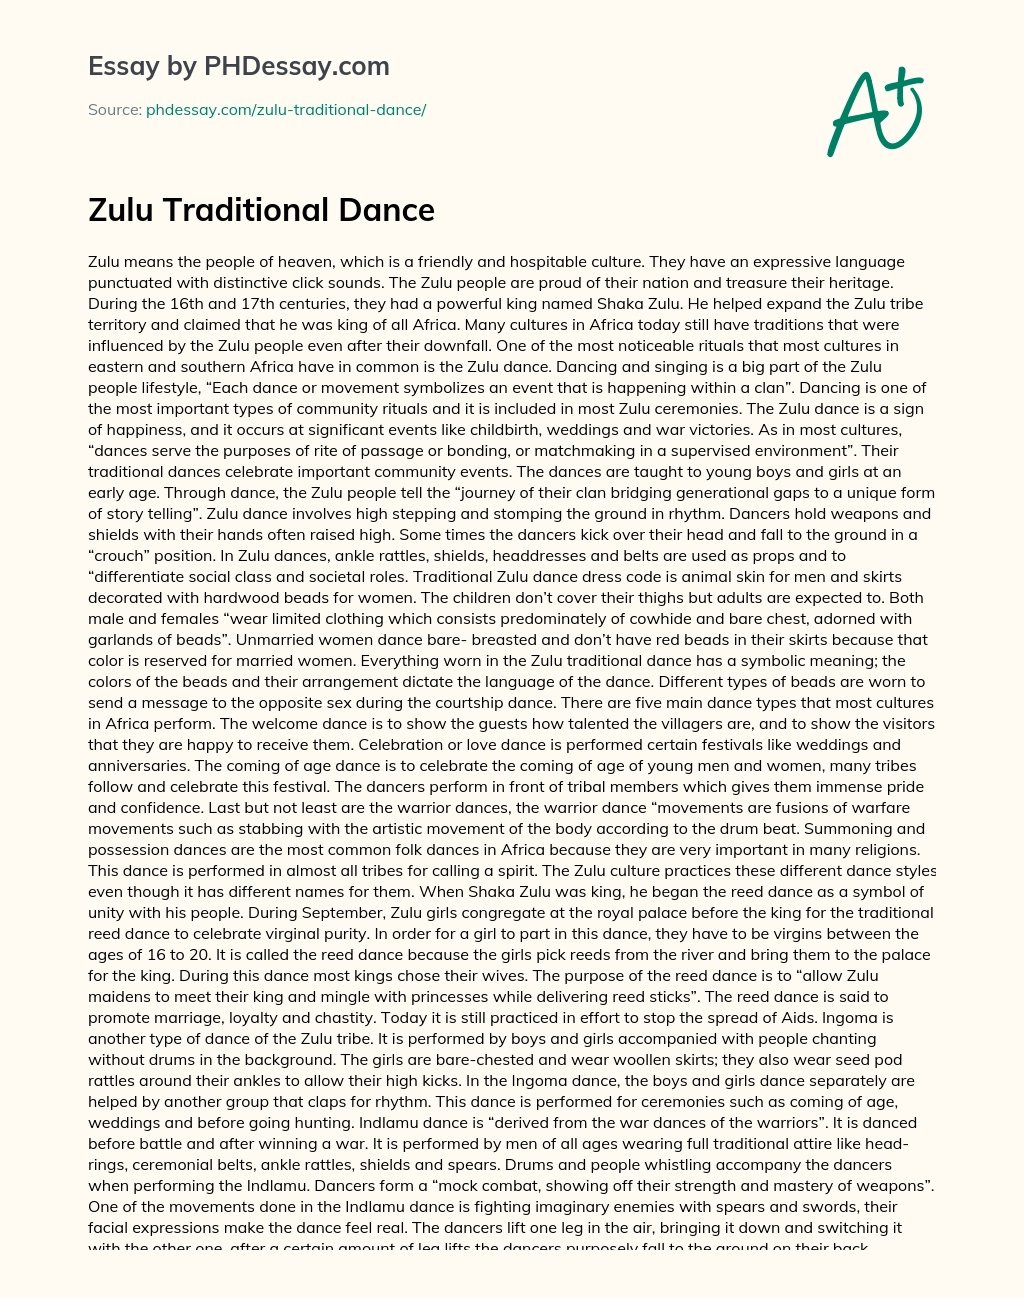 Zulu Traditional Dance essay